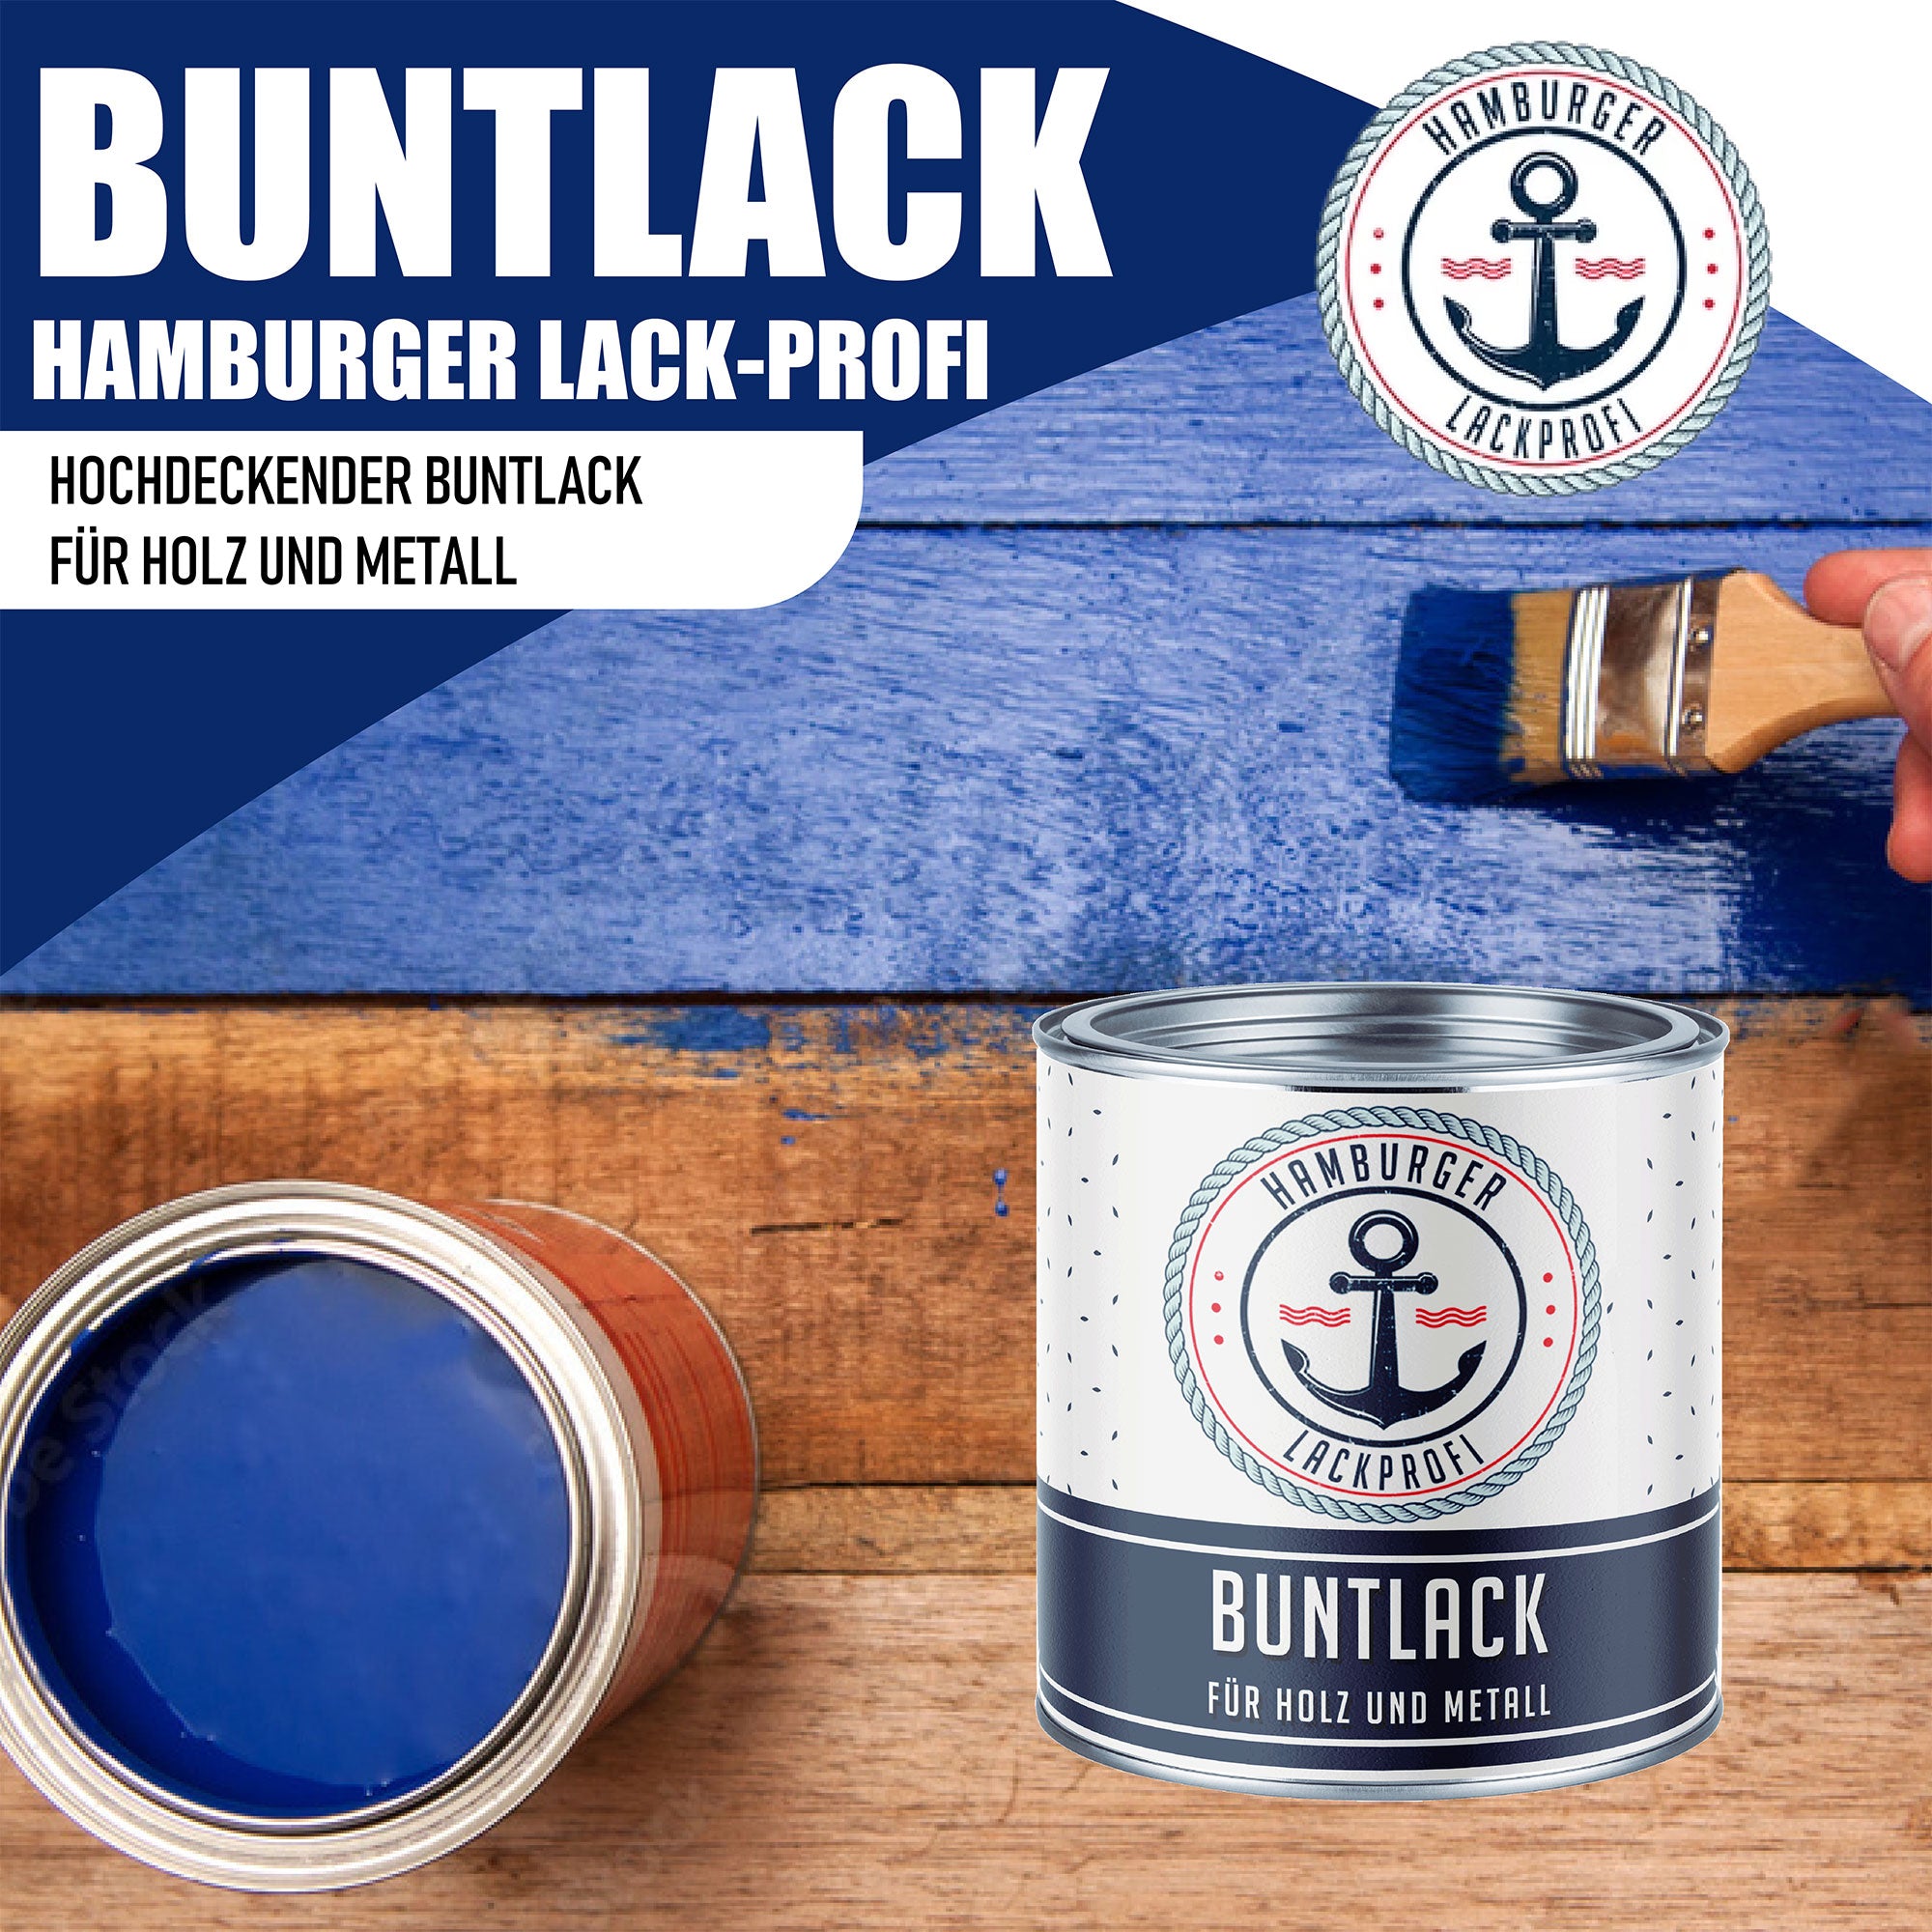 Hamburger Lack-Profi Buntlack in Erikaviolett RAL 4003 mit Lackierset (X300) & Verdünnung (1 L) - 30% Sparangebot